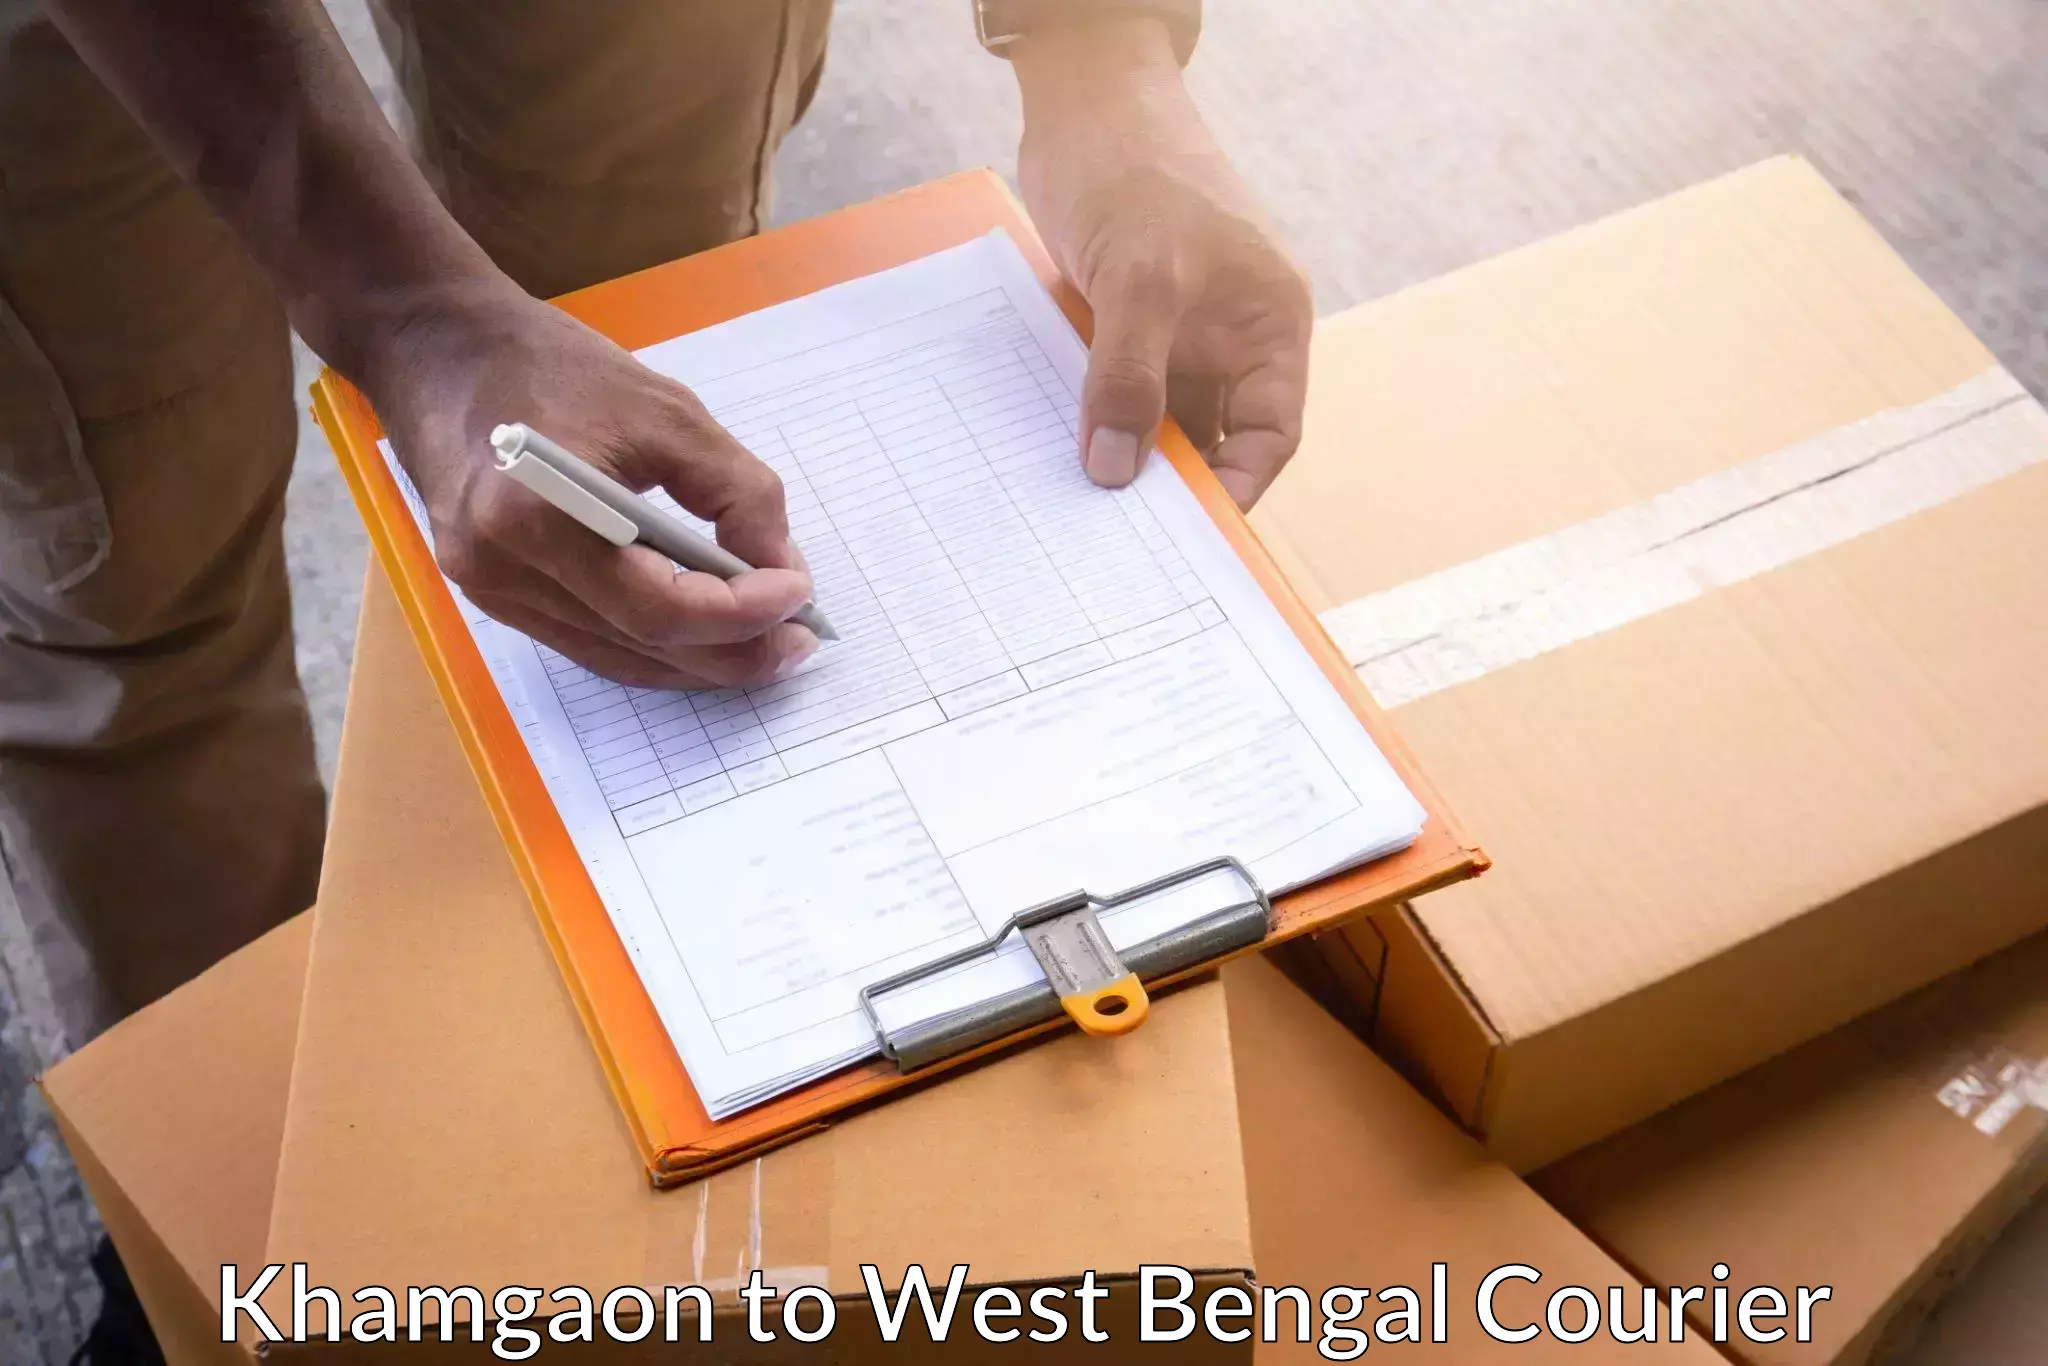 Courier insurance in Khamgaon to Puruliya